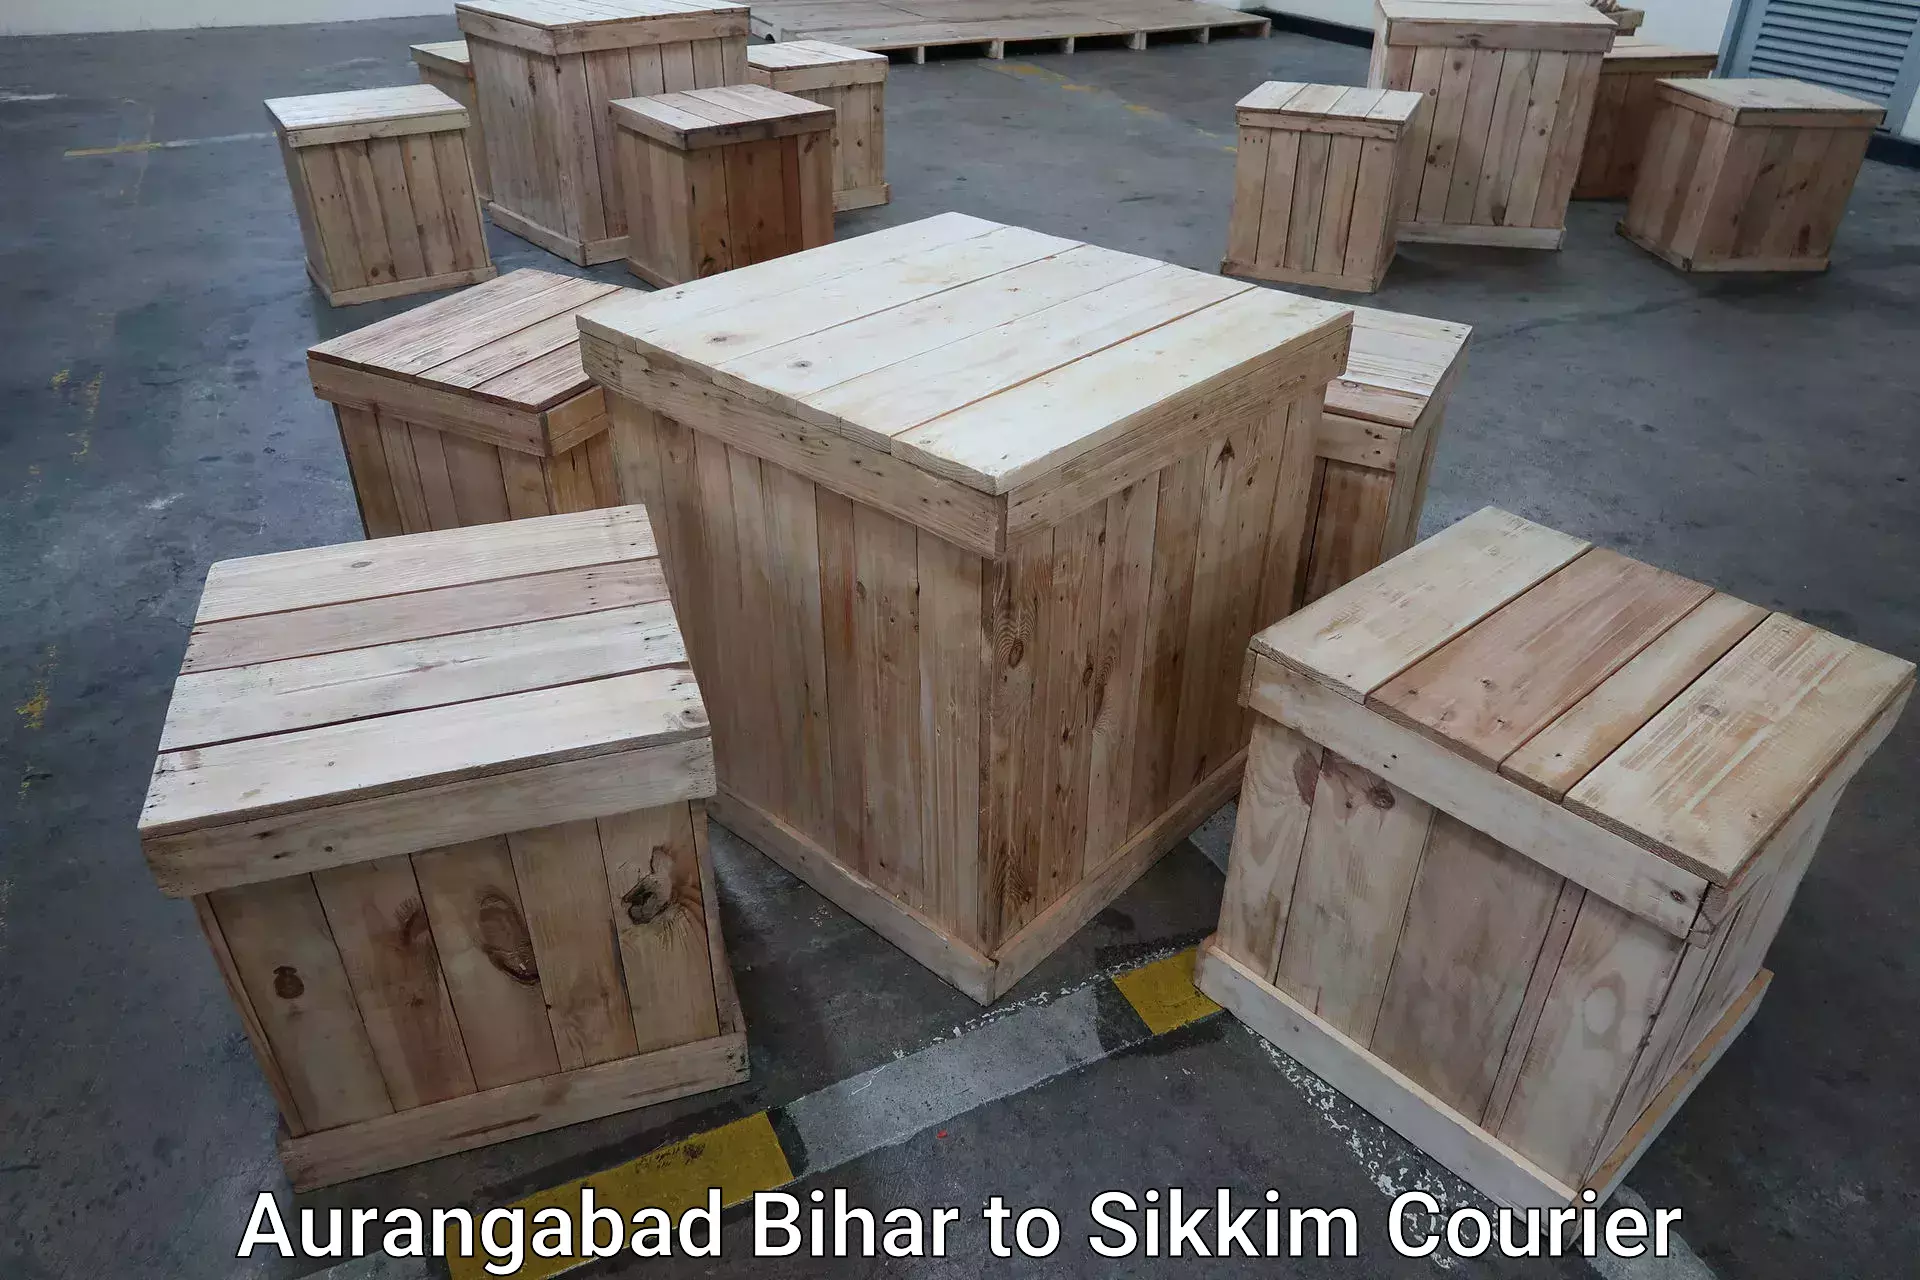 Luggage delivery news Aurangabad Bihar to Sikkim